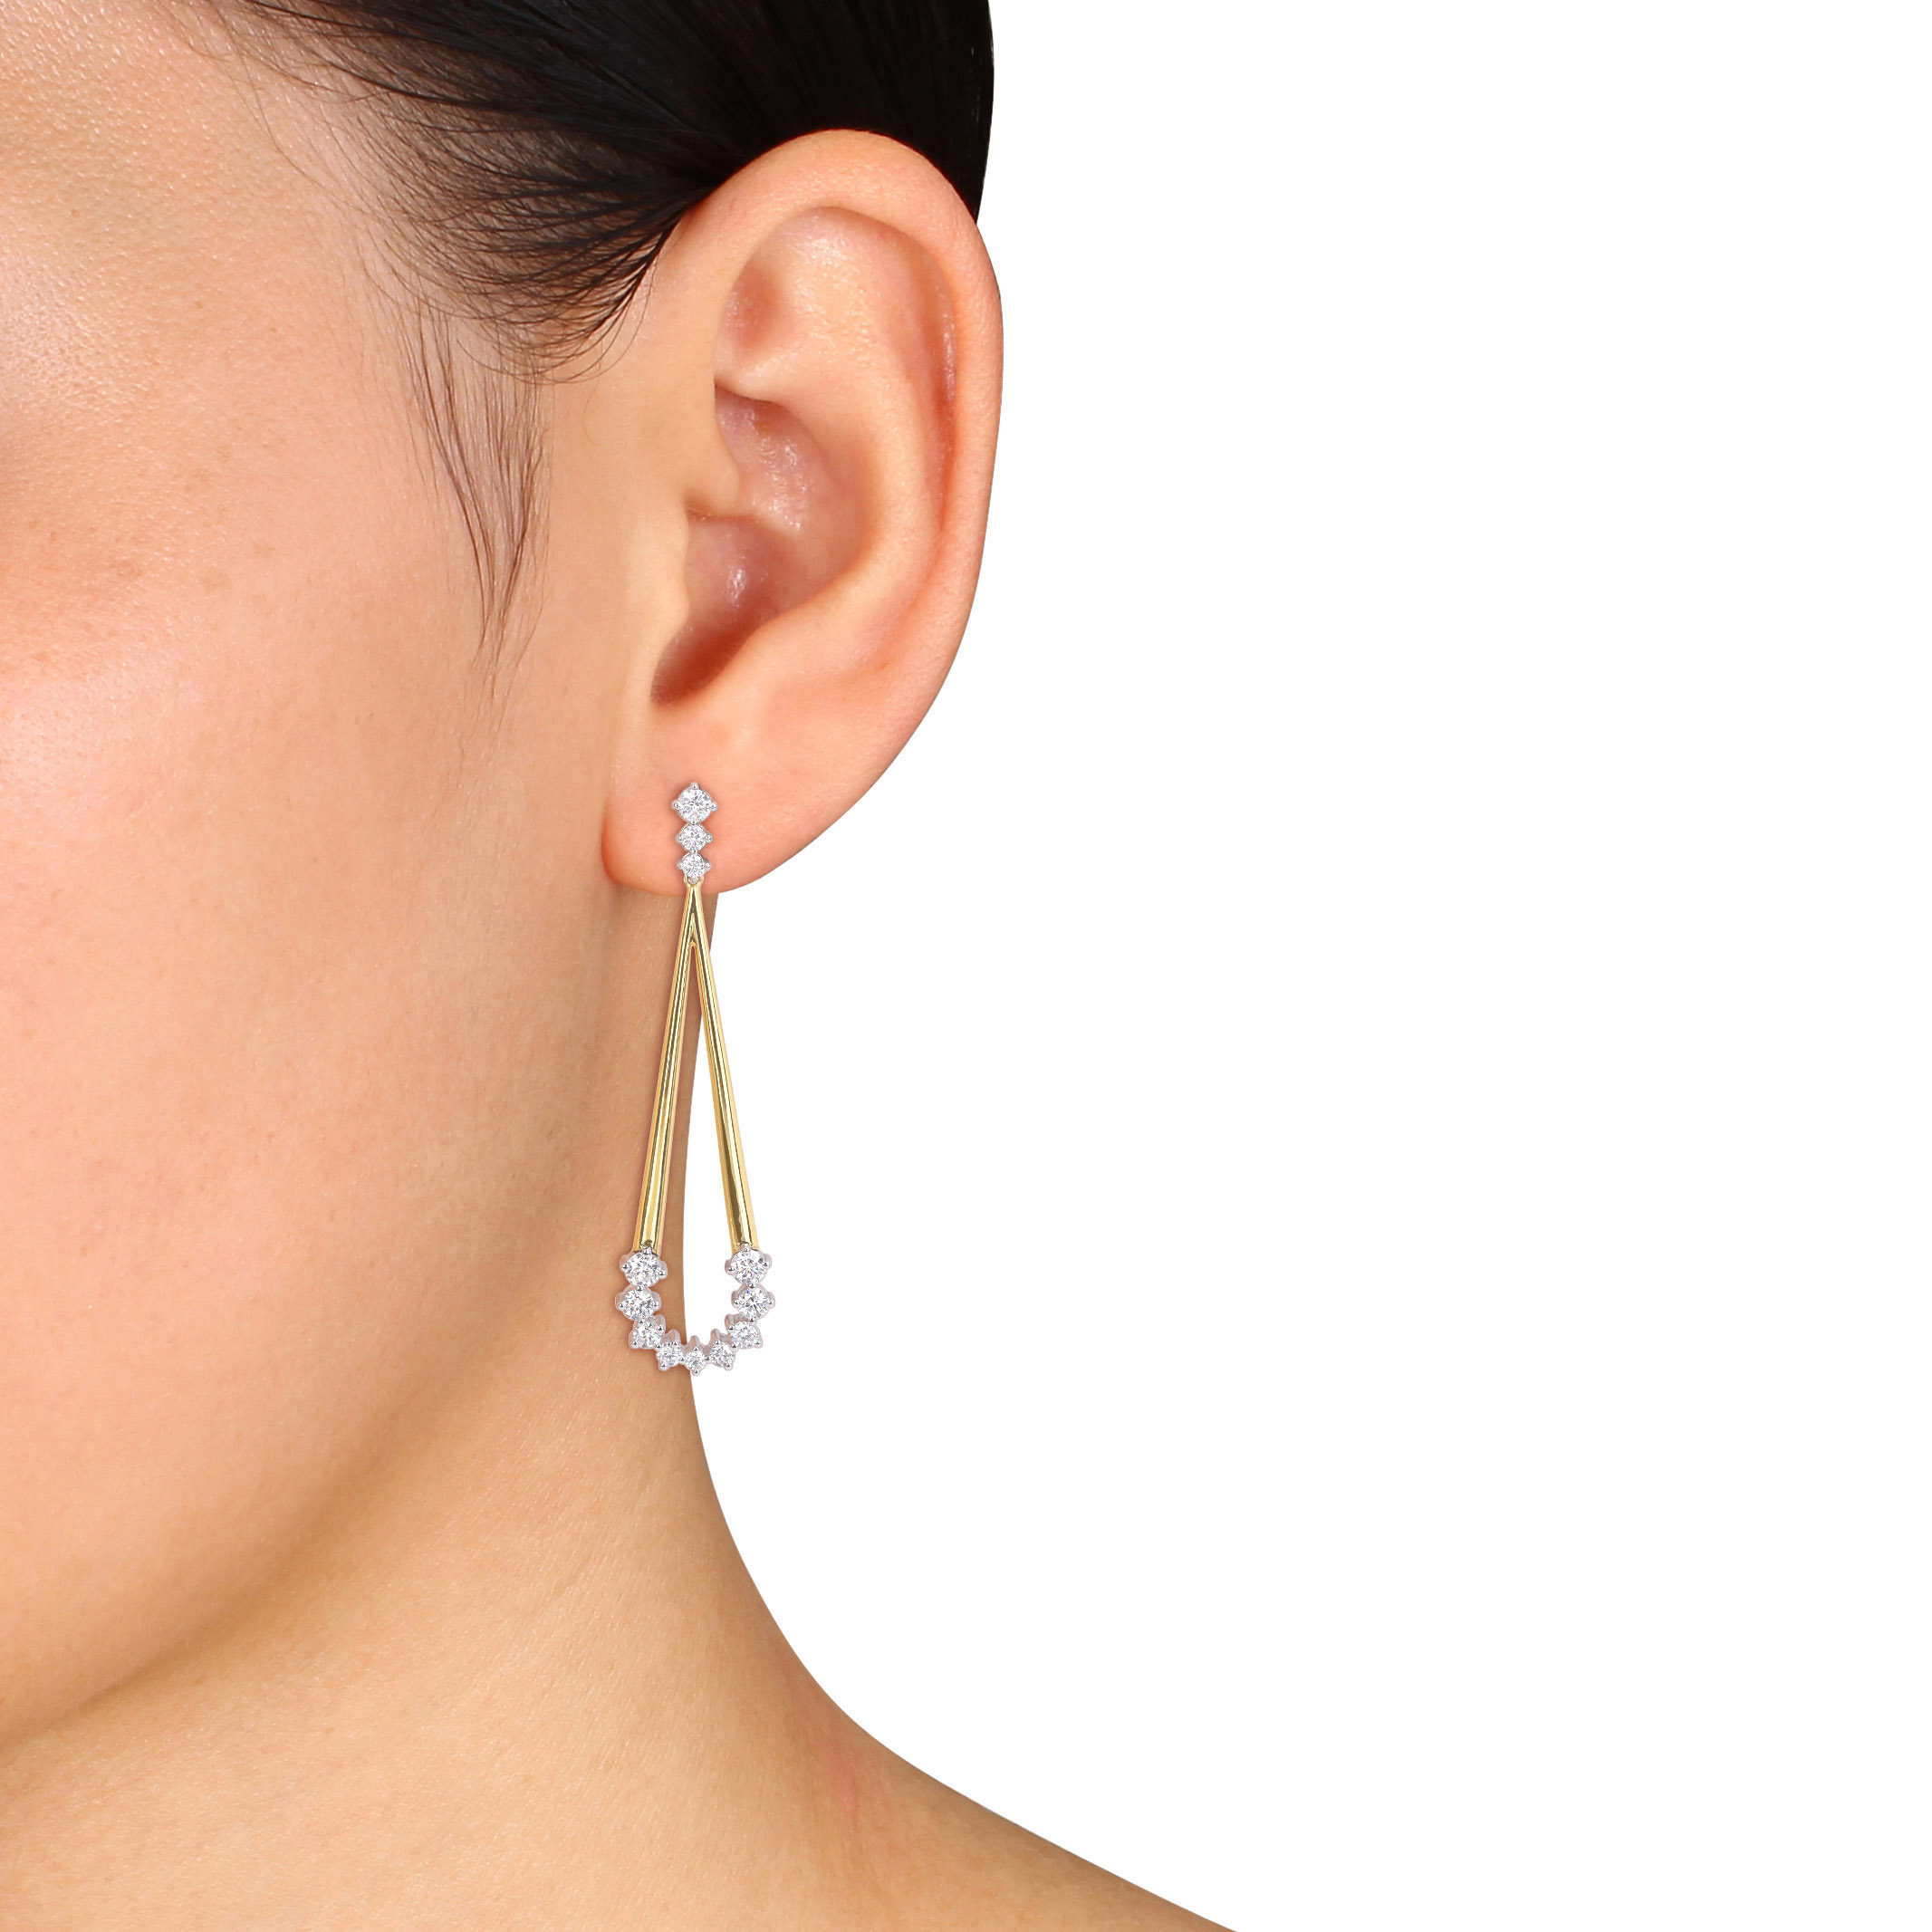 2 CT TDW Diamond Dangle Earrings in 14k 2-Tone White and Yellow Gold